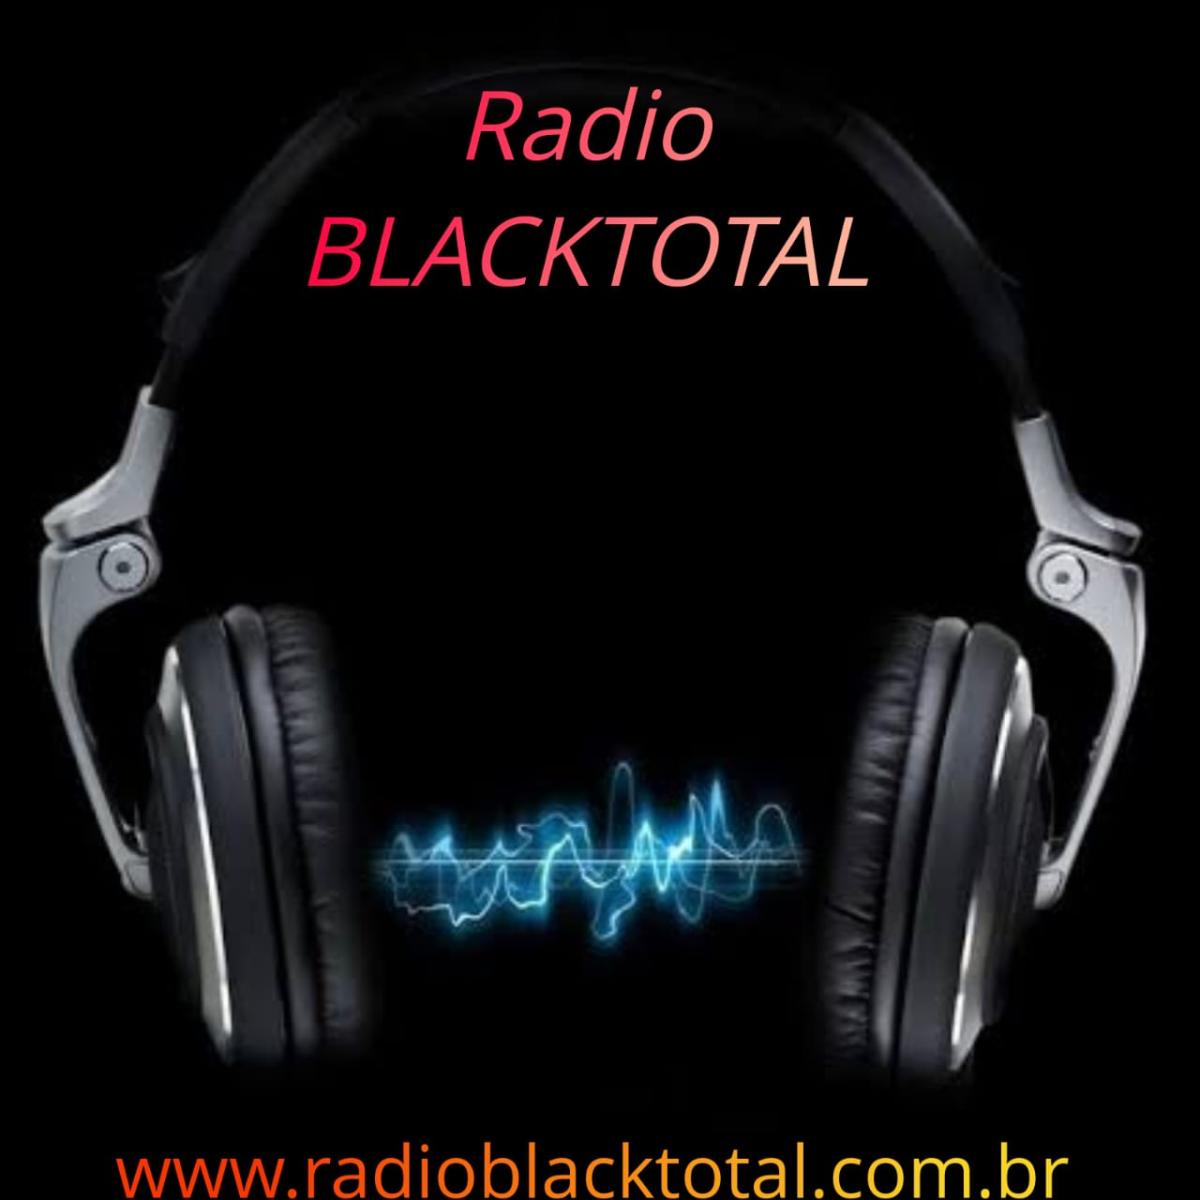 RADIO BLACKTOTAL